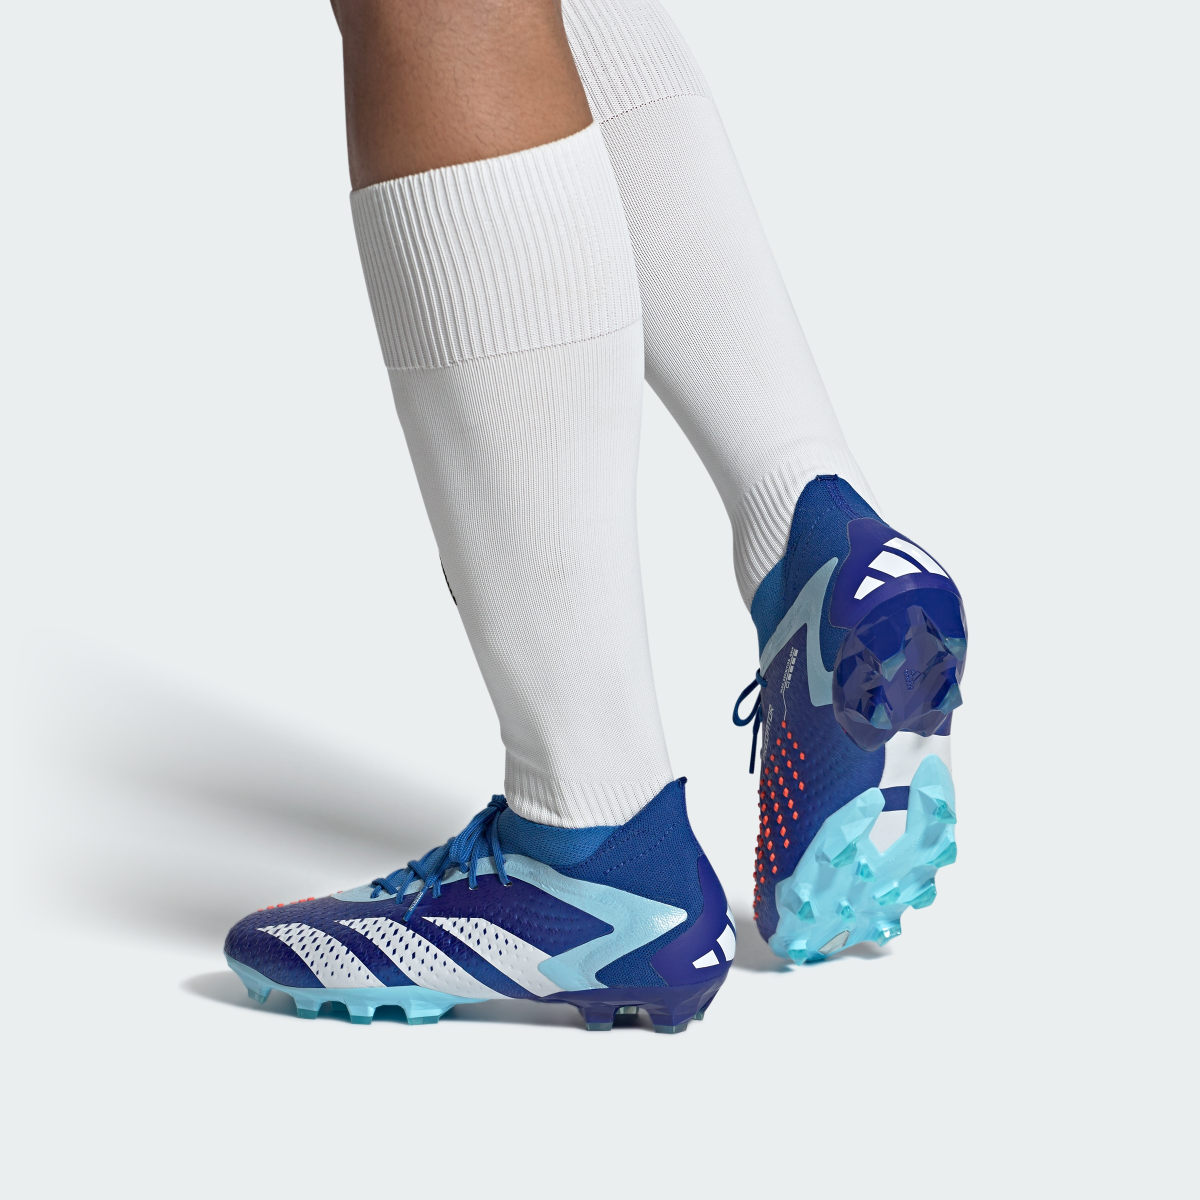 Adidas Predator Accuracy.1 Artificial Grass Soccer Cleats. 5